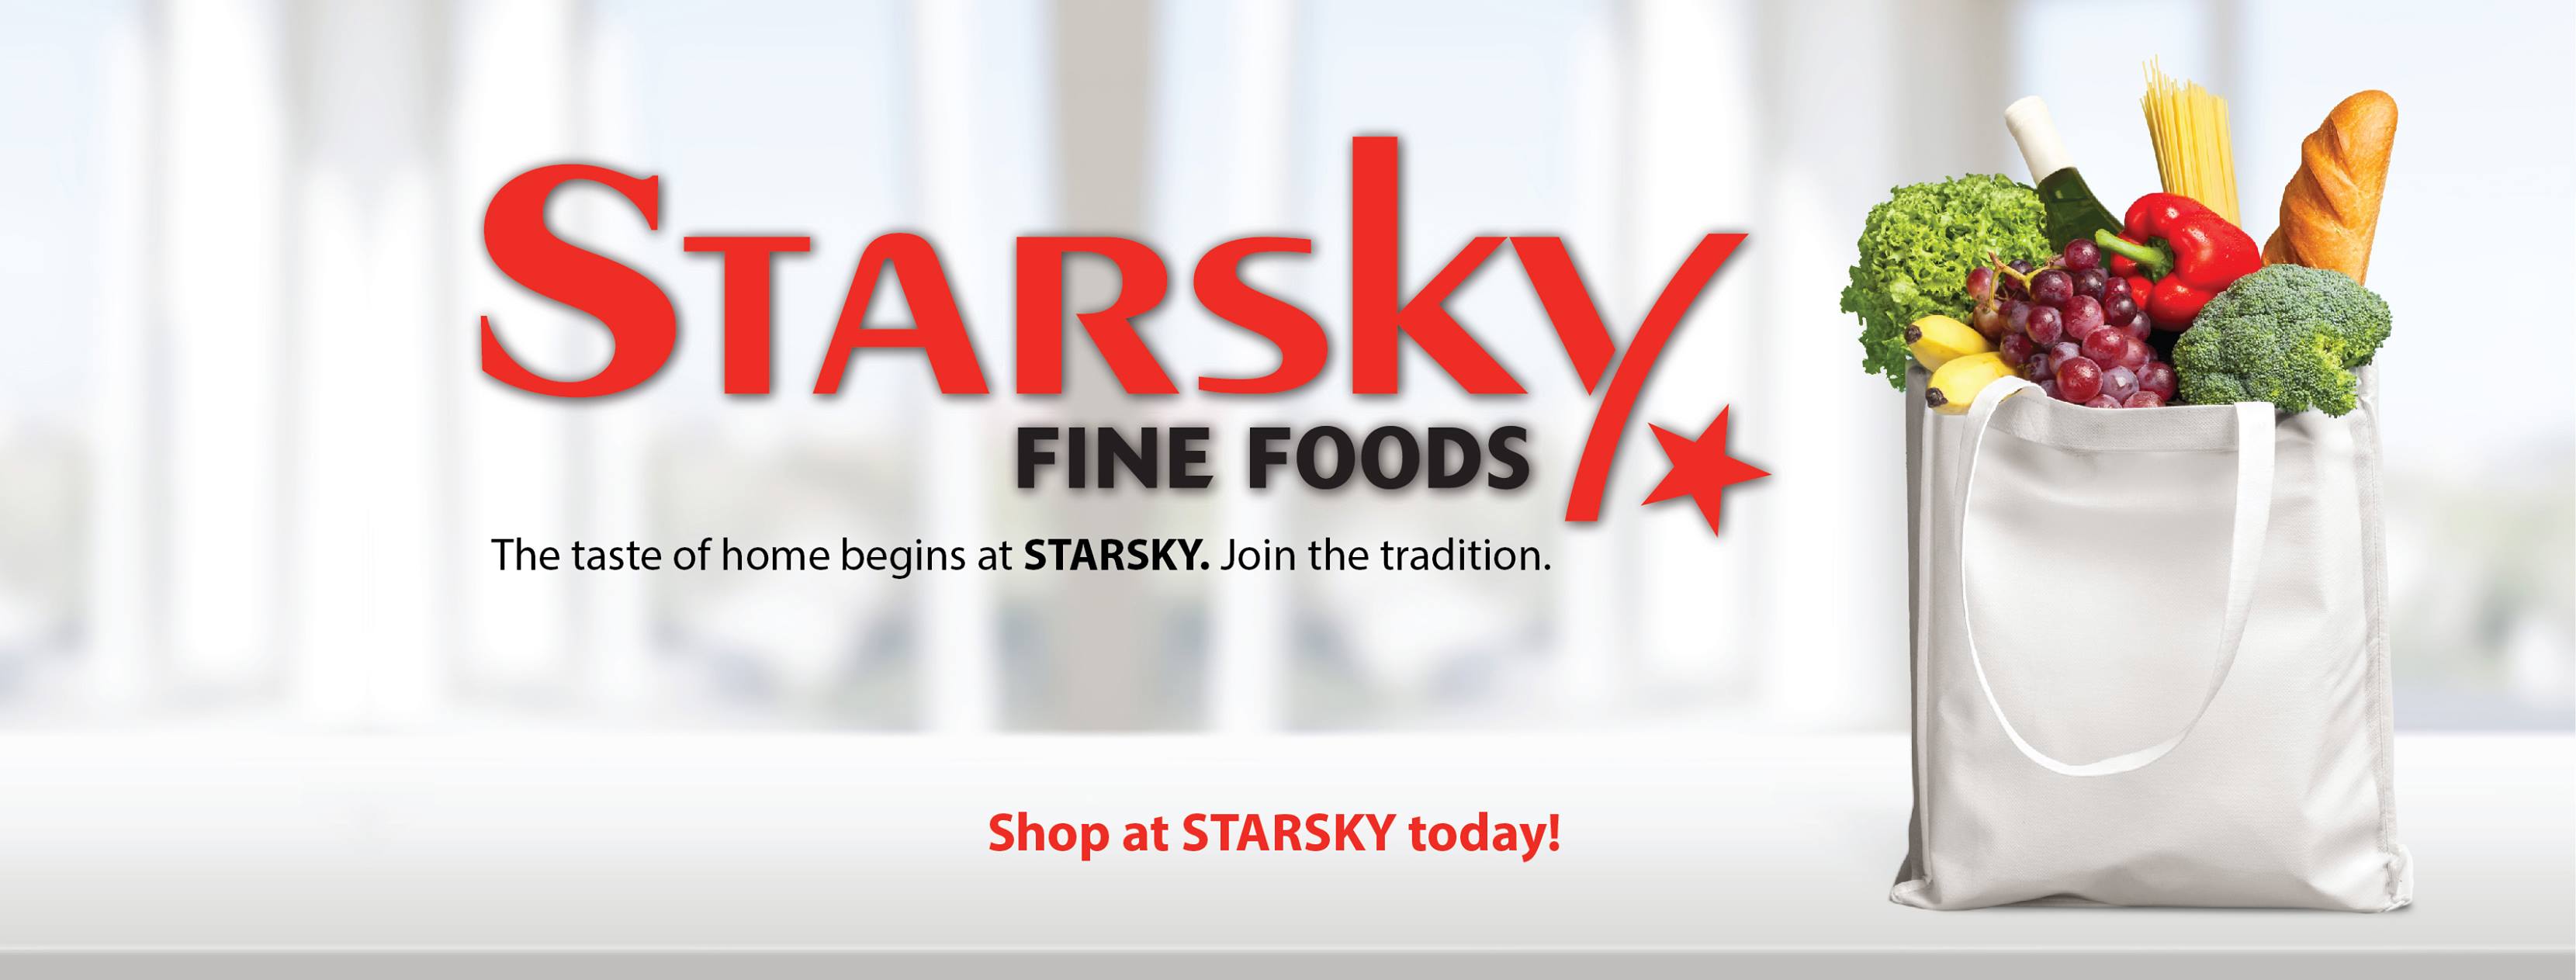 Starsky online